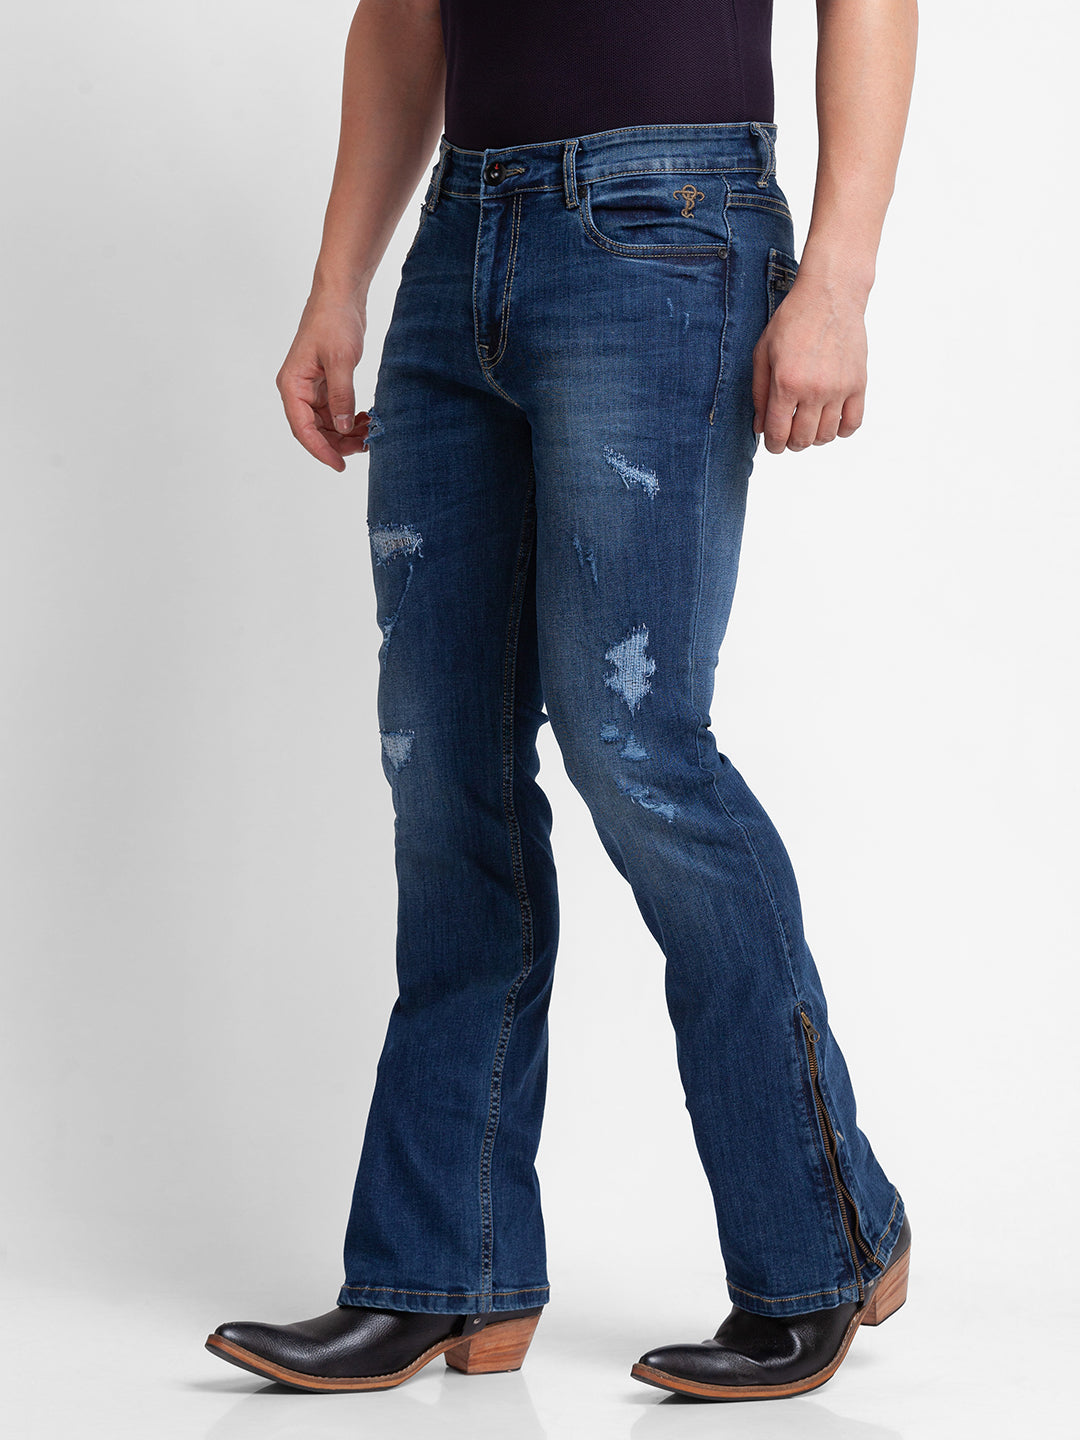 Blue Bootcut Jeans for Men